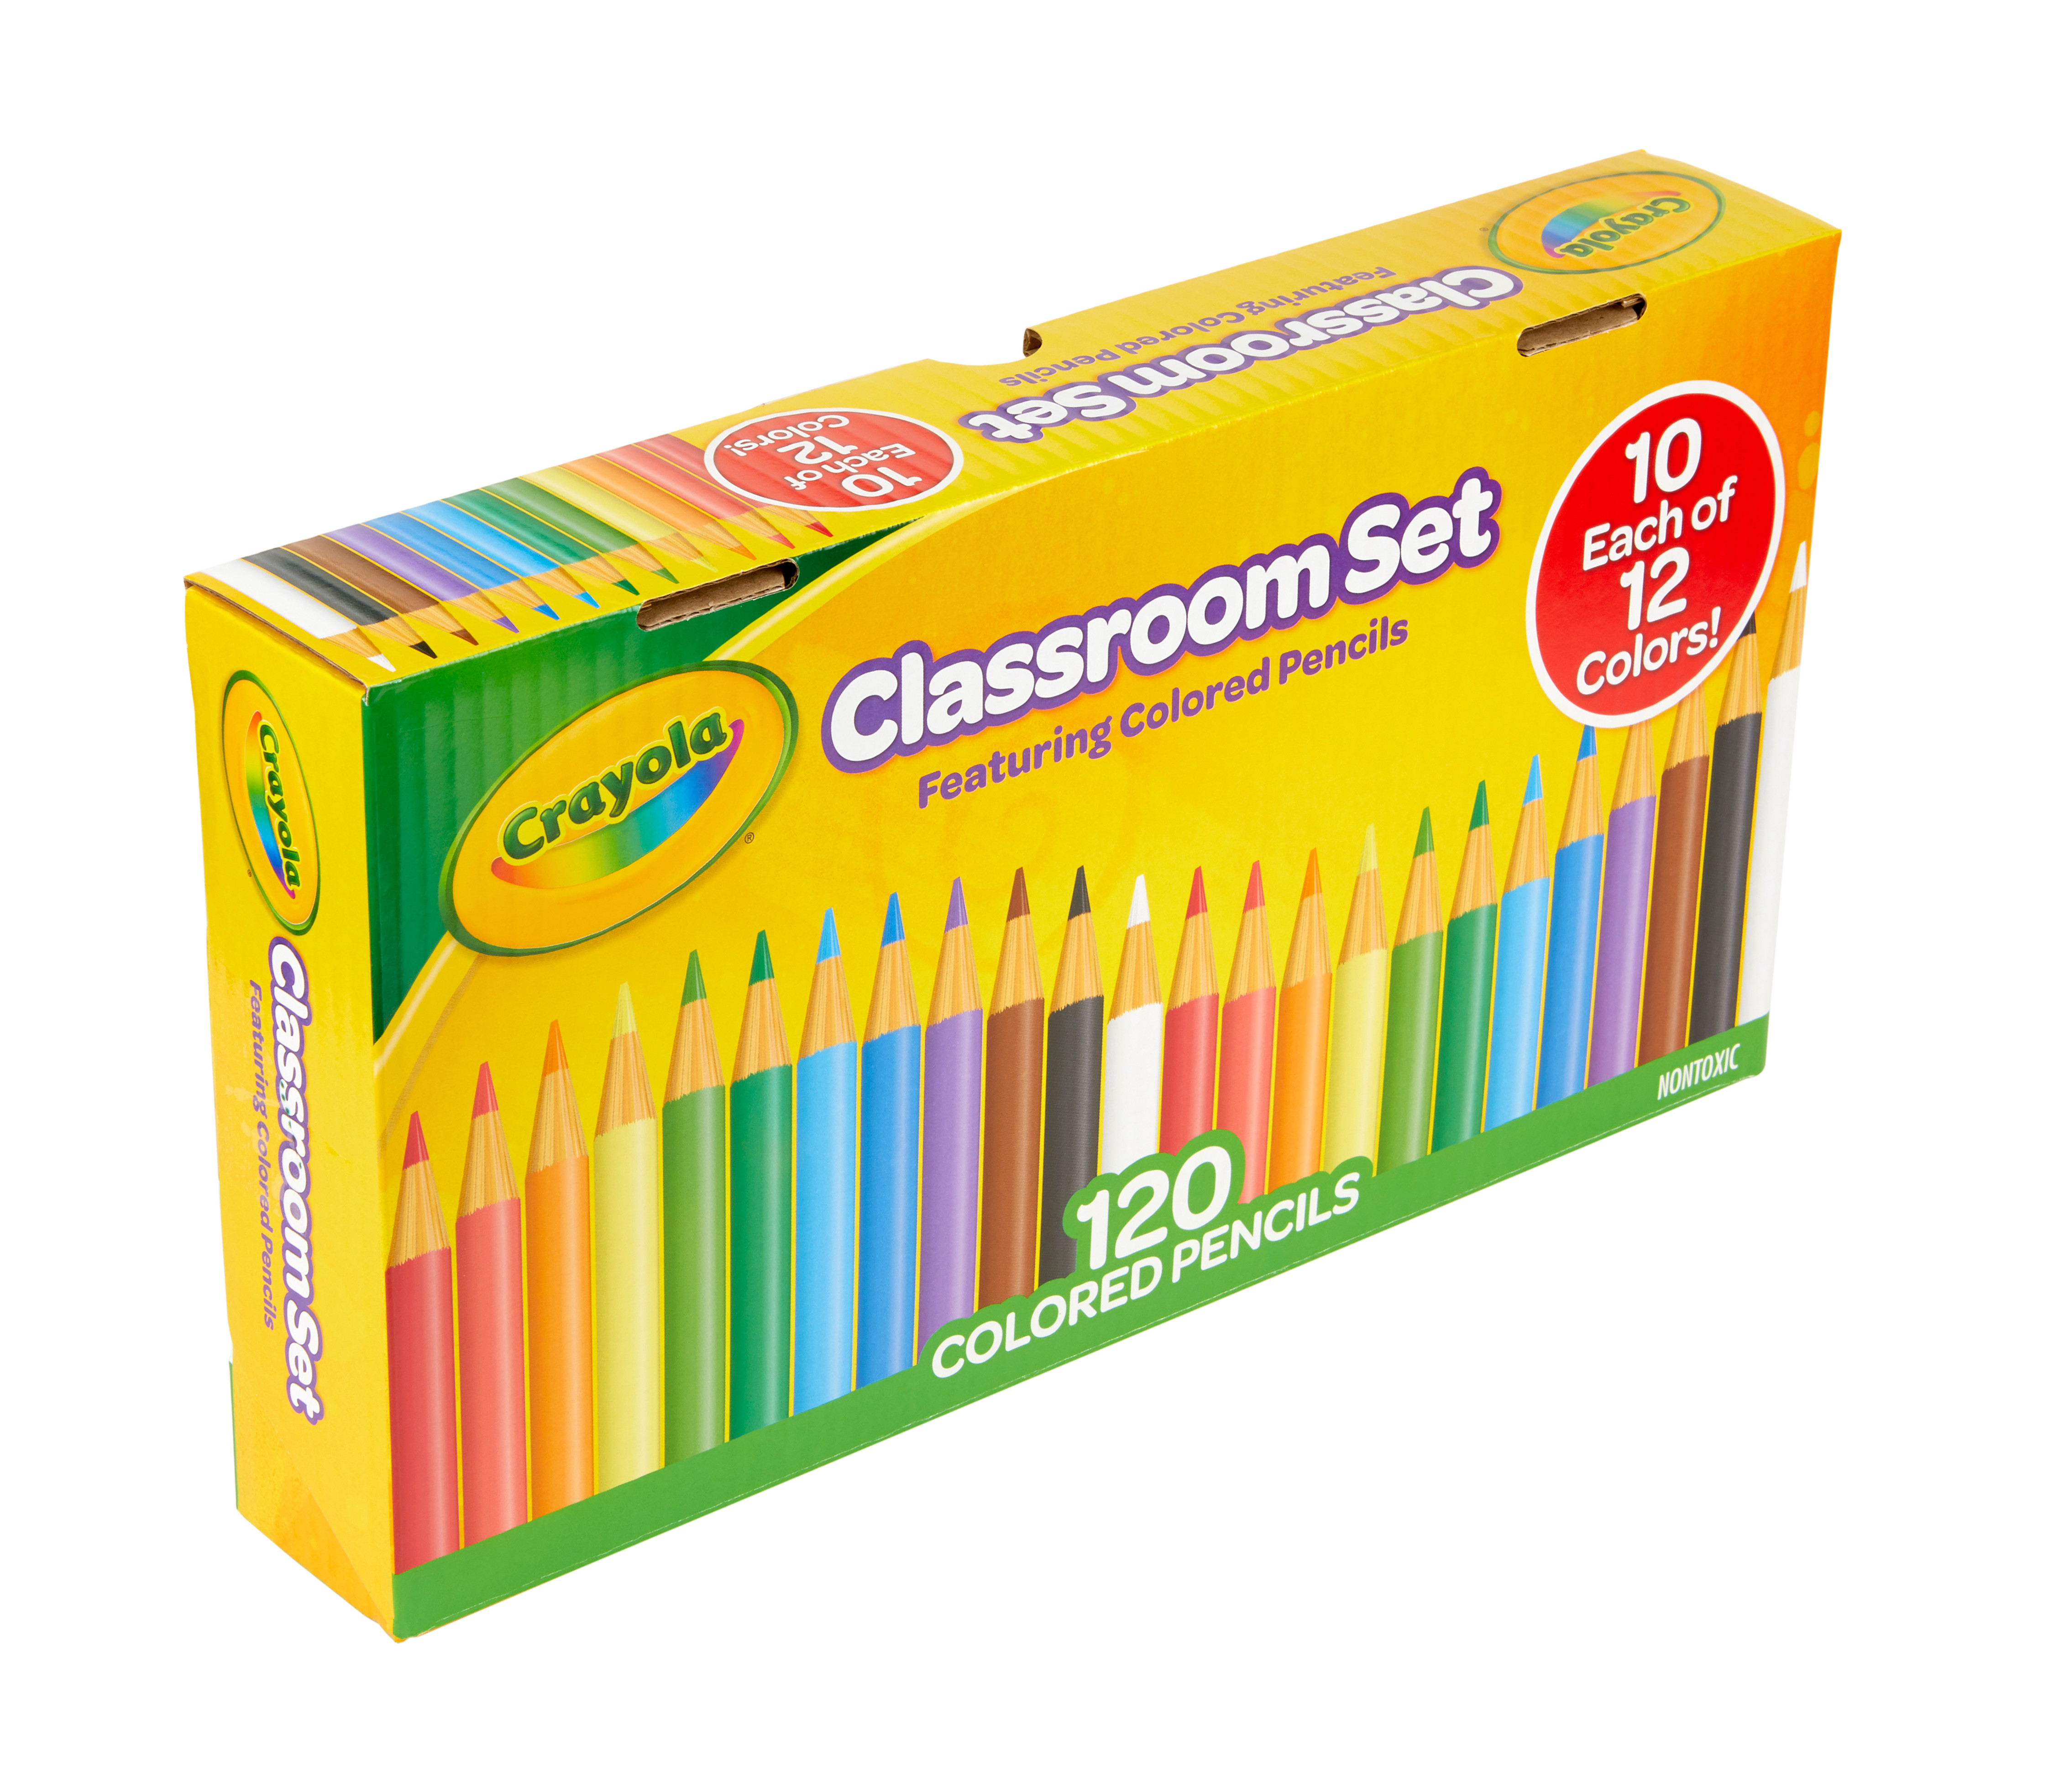 Crayola Classroom Set Colored Pencils, 120 Ct, Teacher Supplies, Teacher Gifts, Beginner Child - image 3 of 6